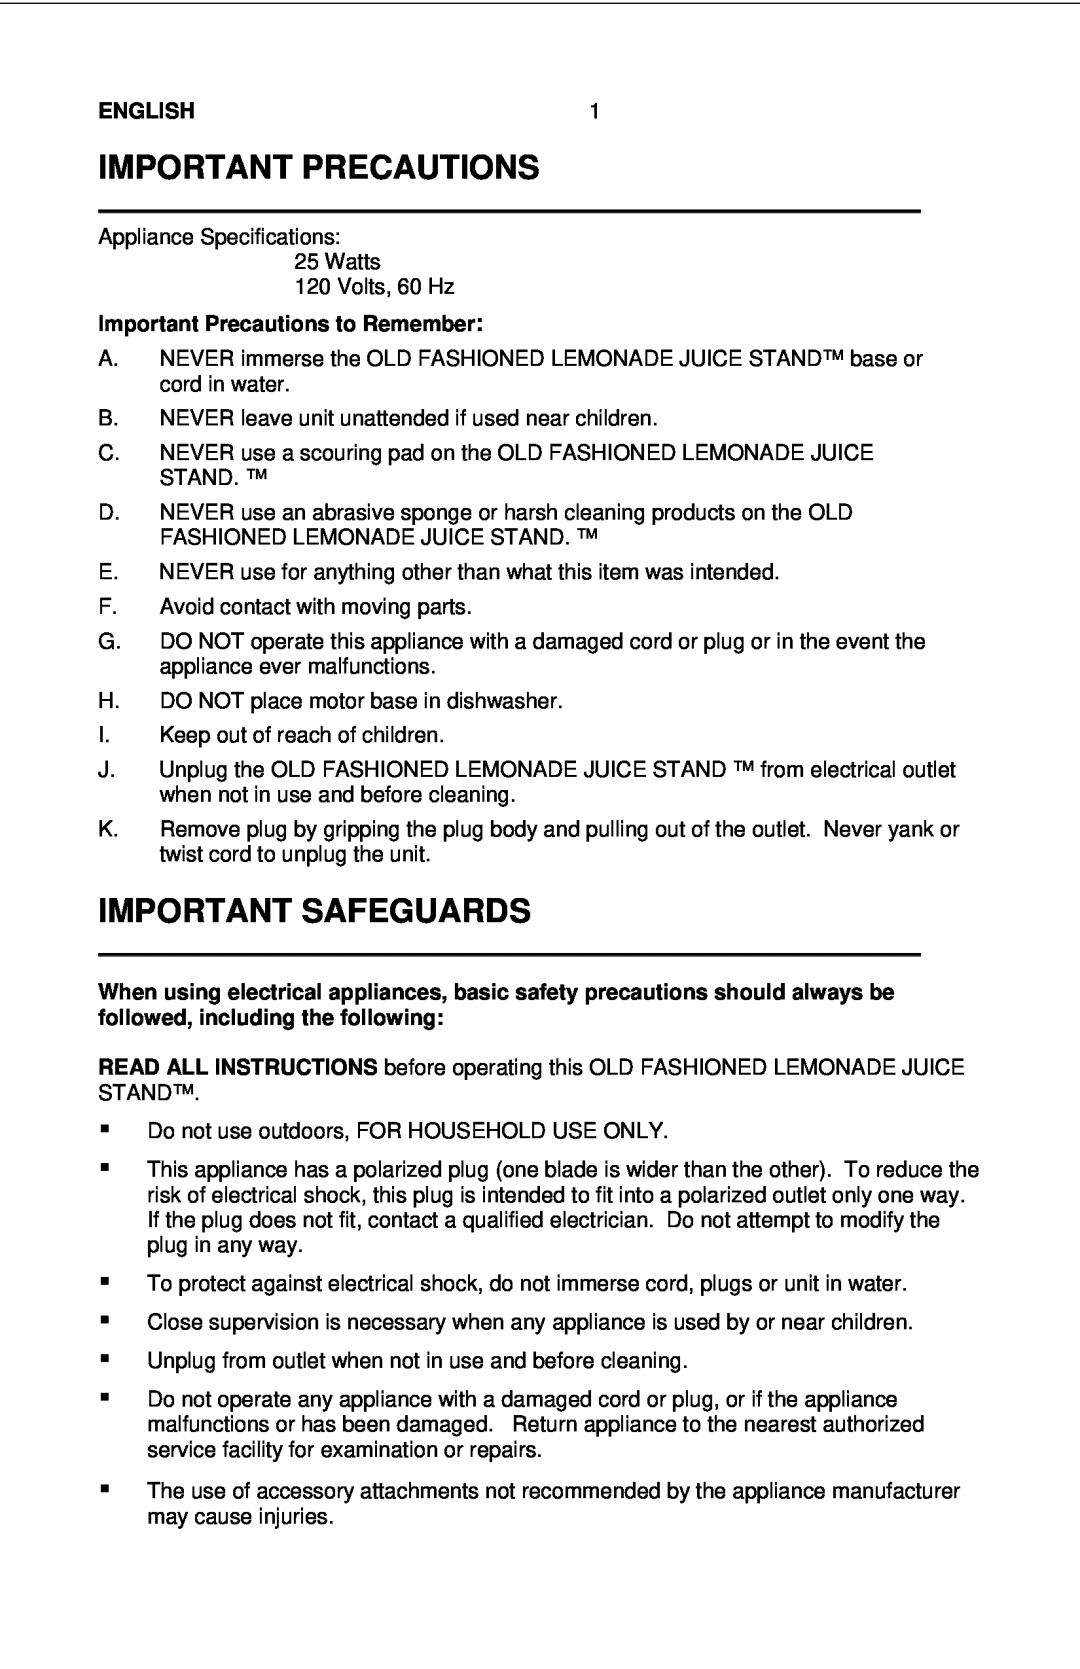 Nostalgia Electrics LJS - 502 manual Important Safeguards, English, Important Precautions to Remember 